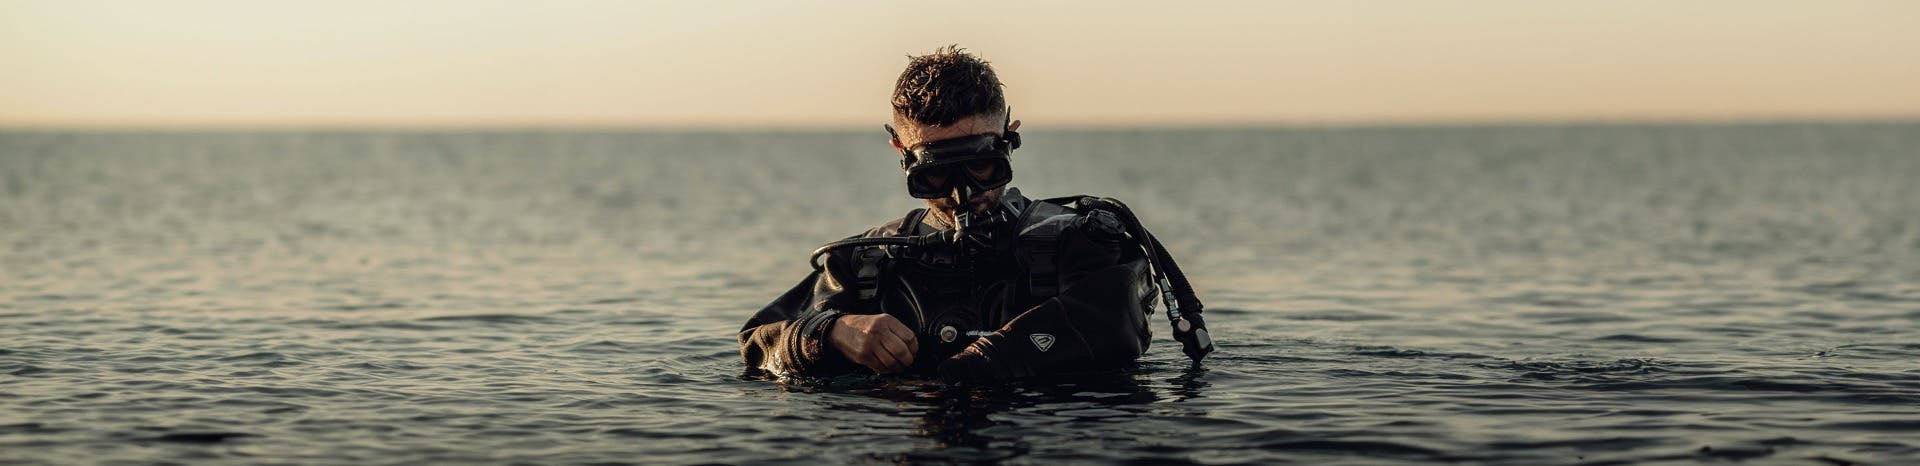 A man wearing a prescription scuba mask on his face while waist deep in the ocean